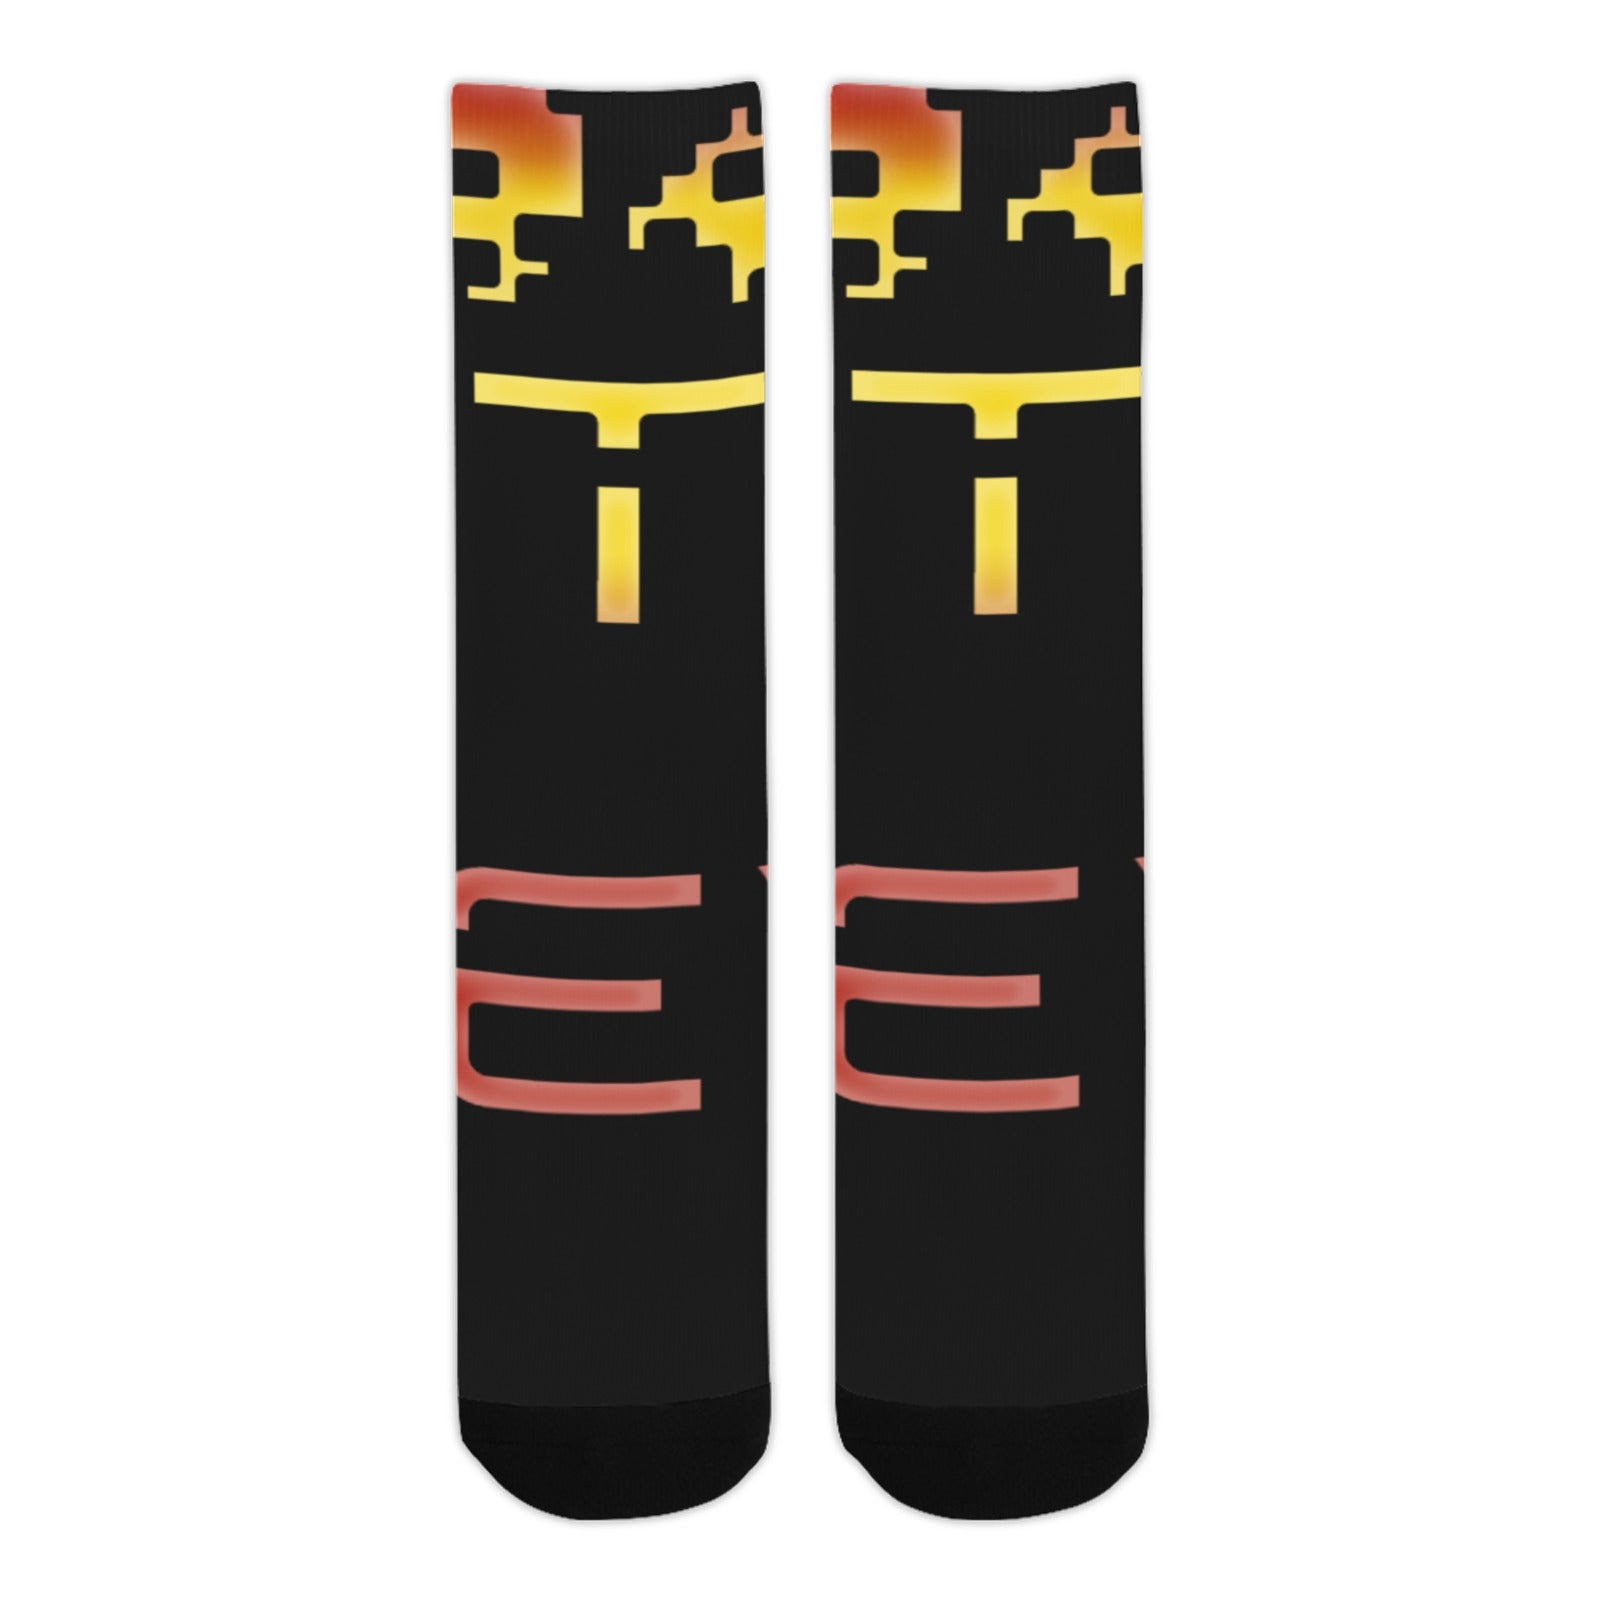 fz unisex socks - red one size / fz socks - black sublimated crew socks(made in usa)